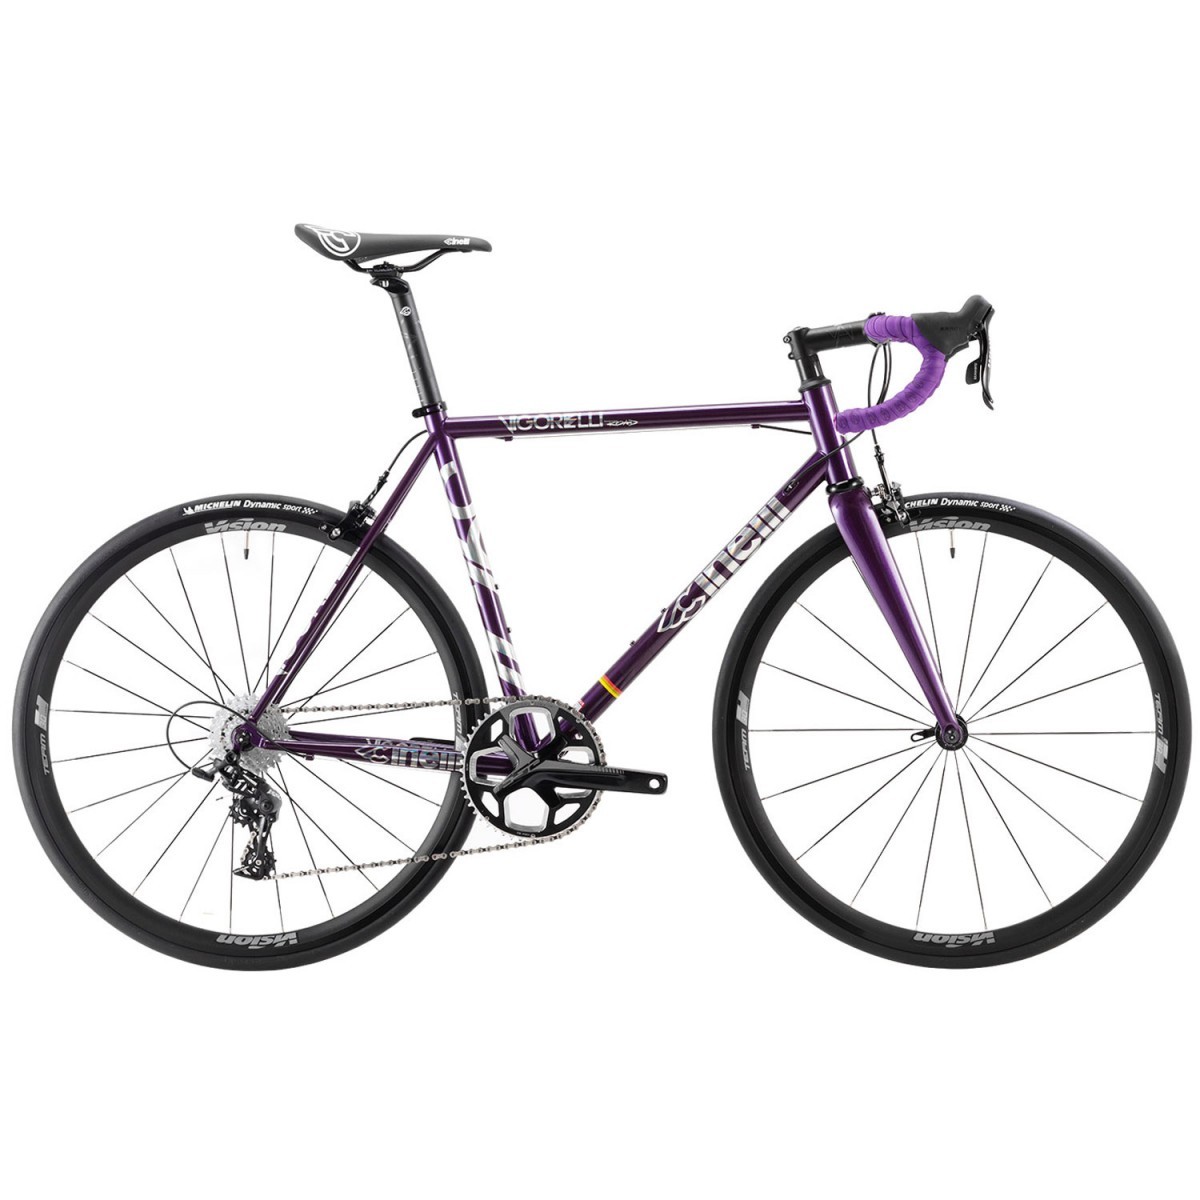 Cinelli Vigorelli 2019 Road Bike, Purple Bikeinn | atelier-yuwa.ciao.jp